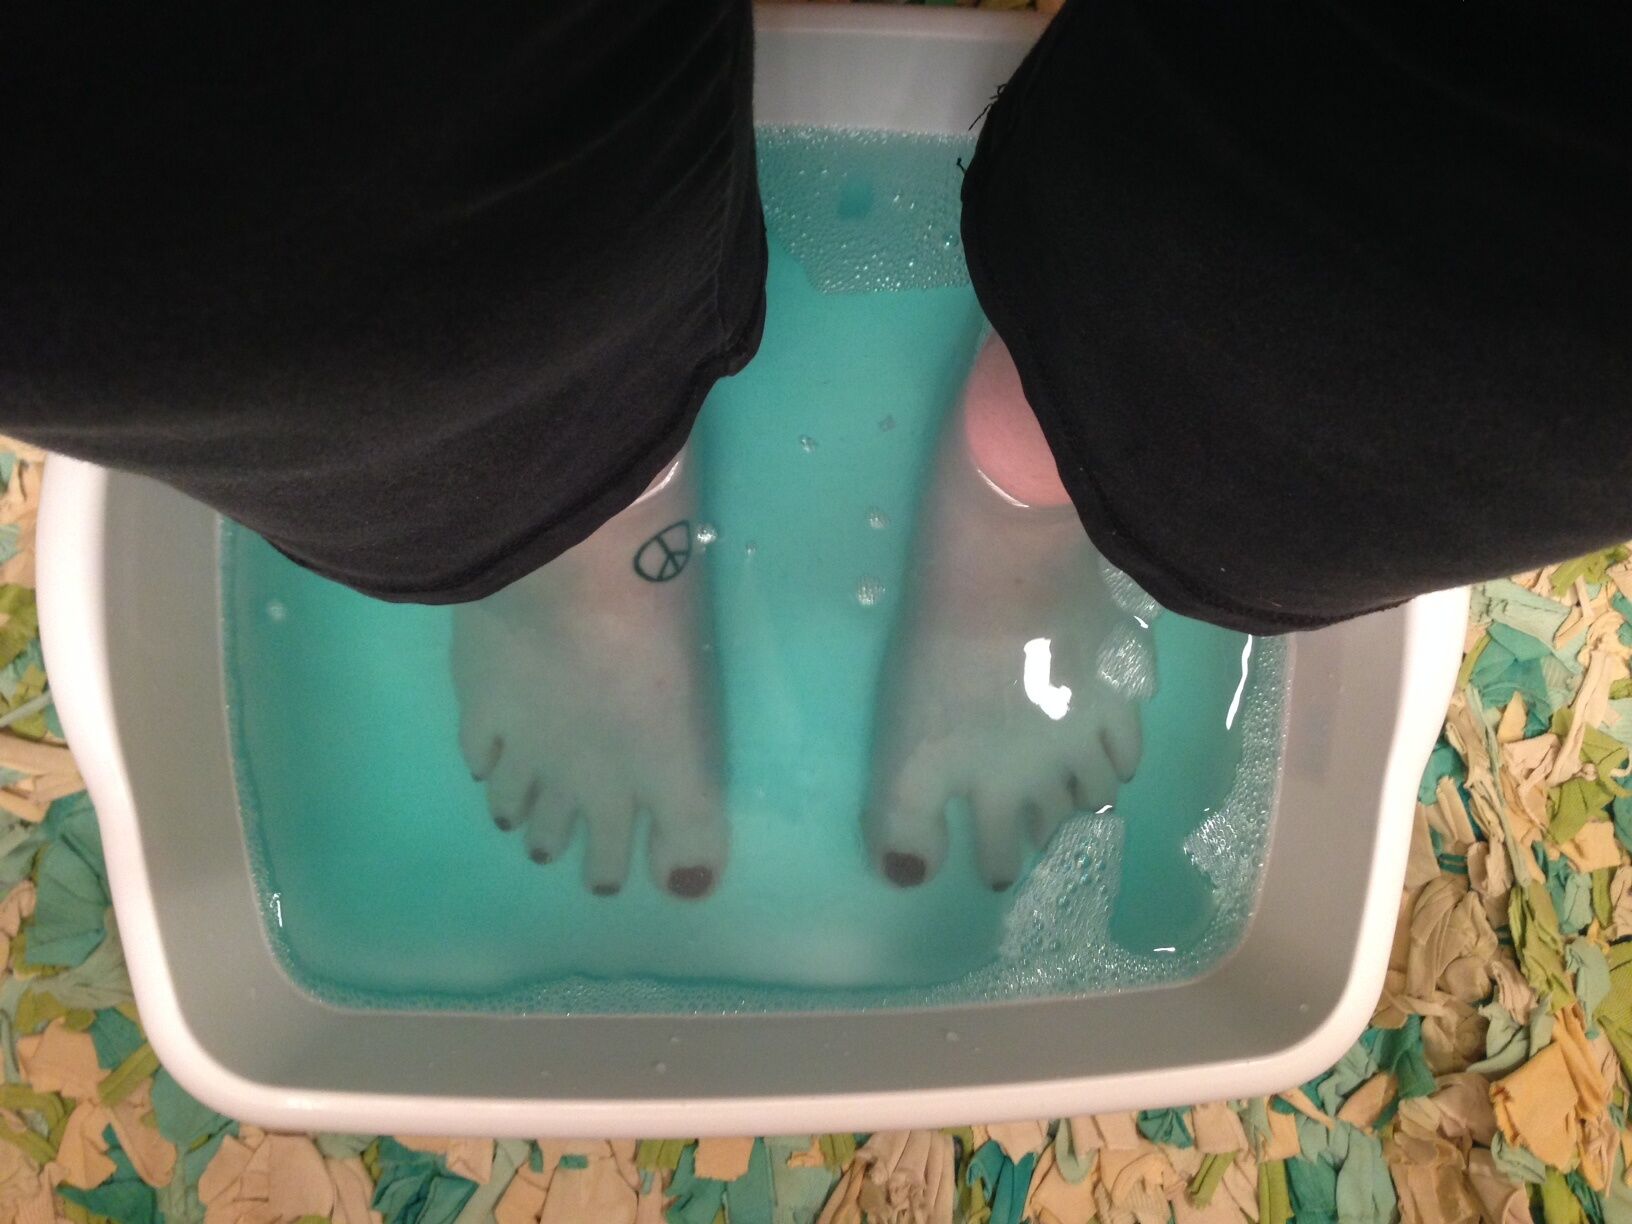 DIY Foot Soak Recipe (With Mouthwash!) To Help Treat Cracked Heels | POPxo